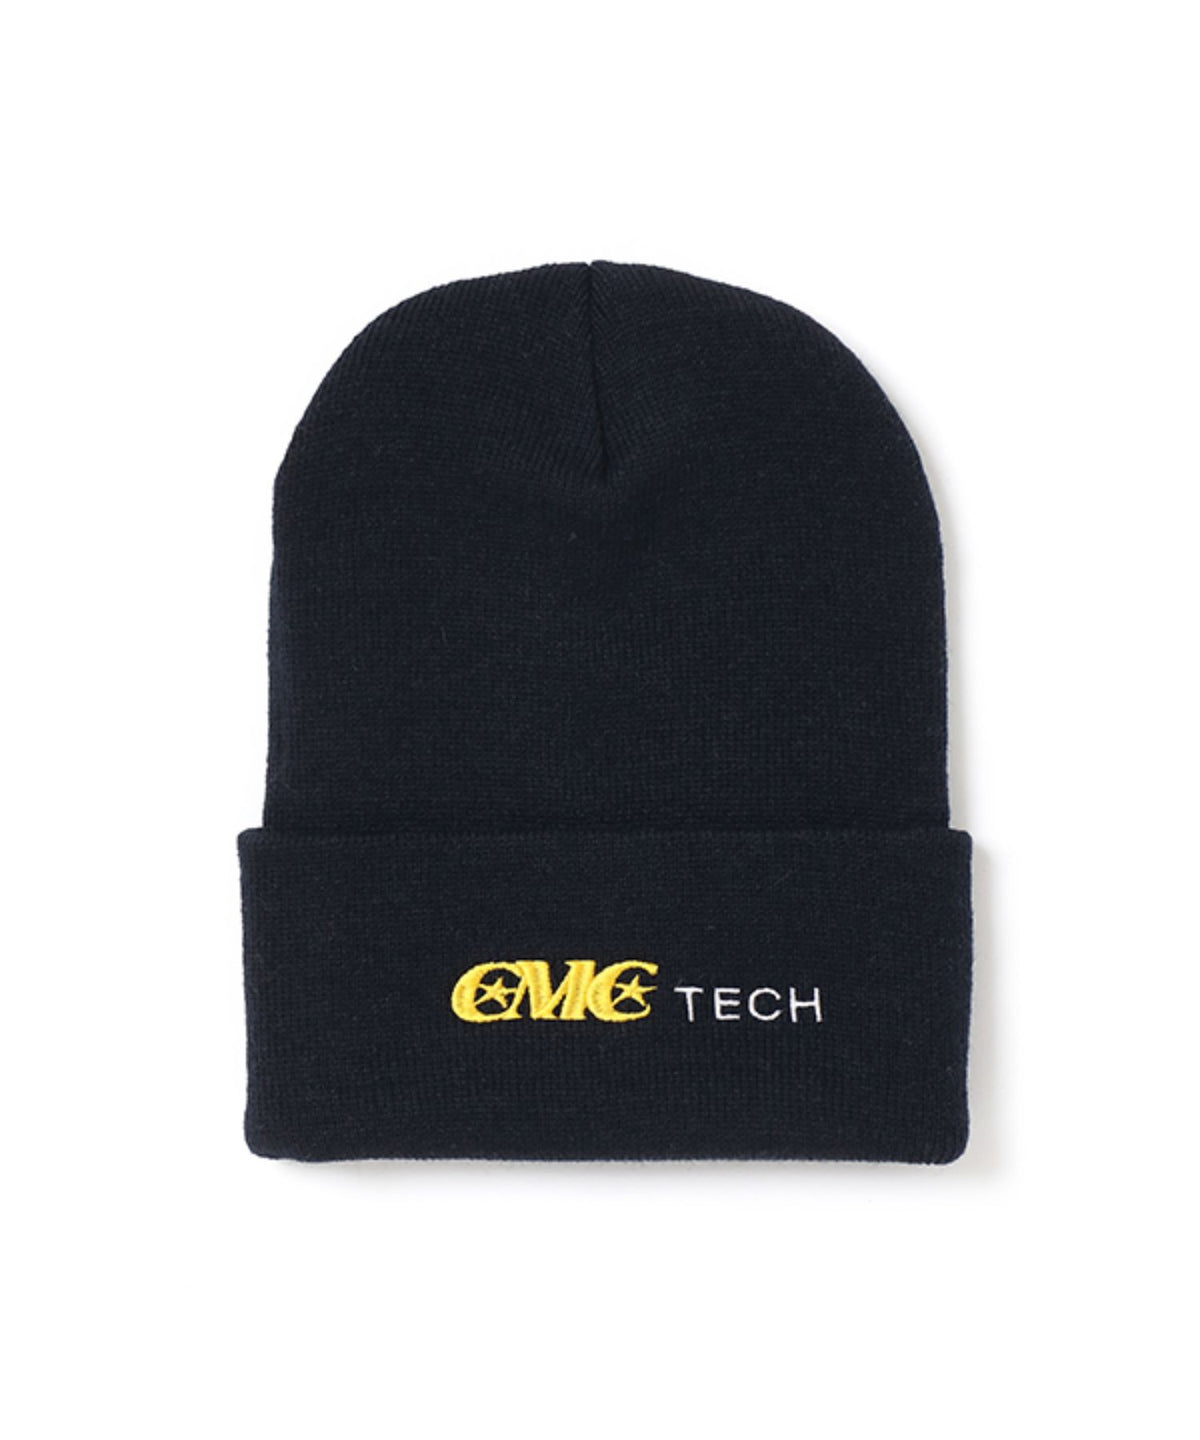 Cmc Knit Cap